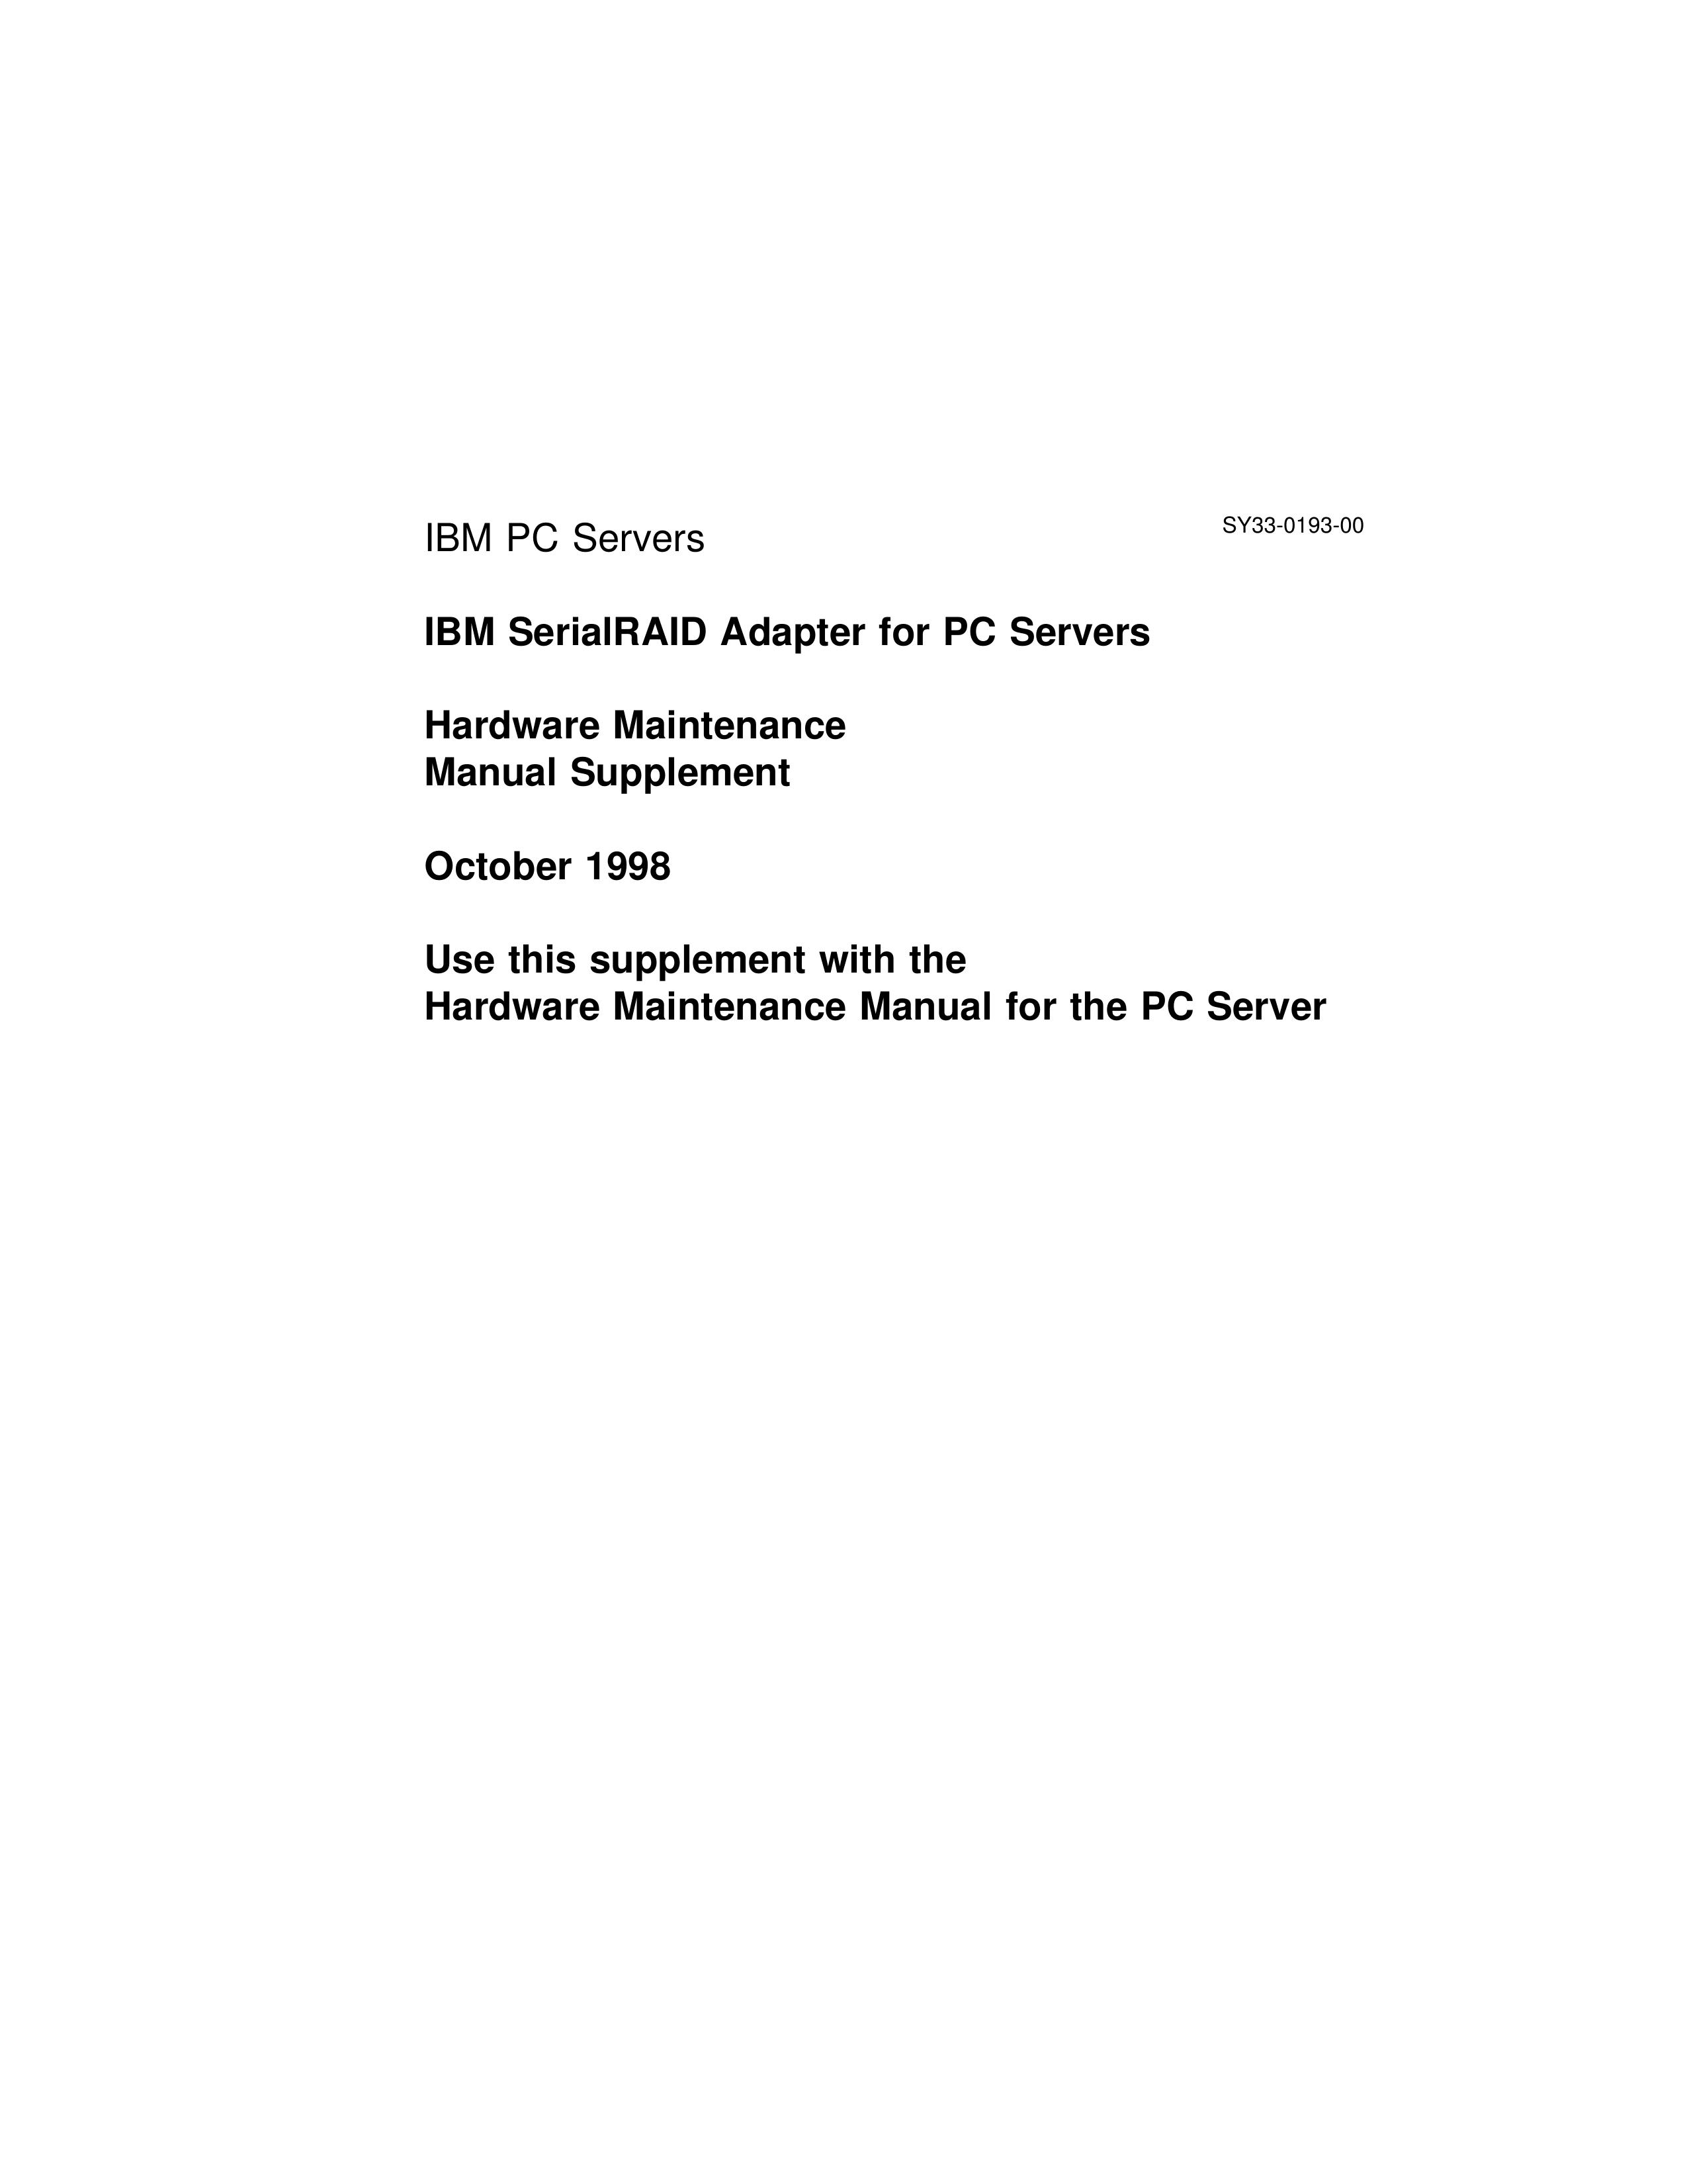 IBM SY33-0193-00 Marine RADAR User Manual